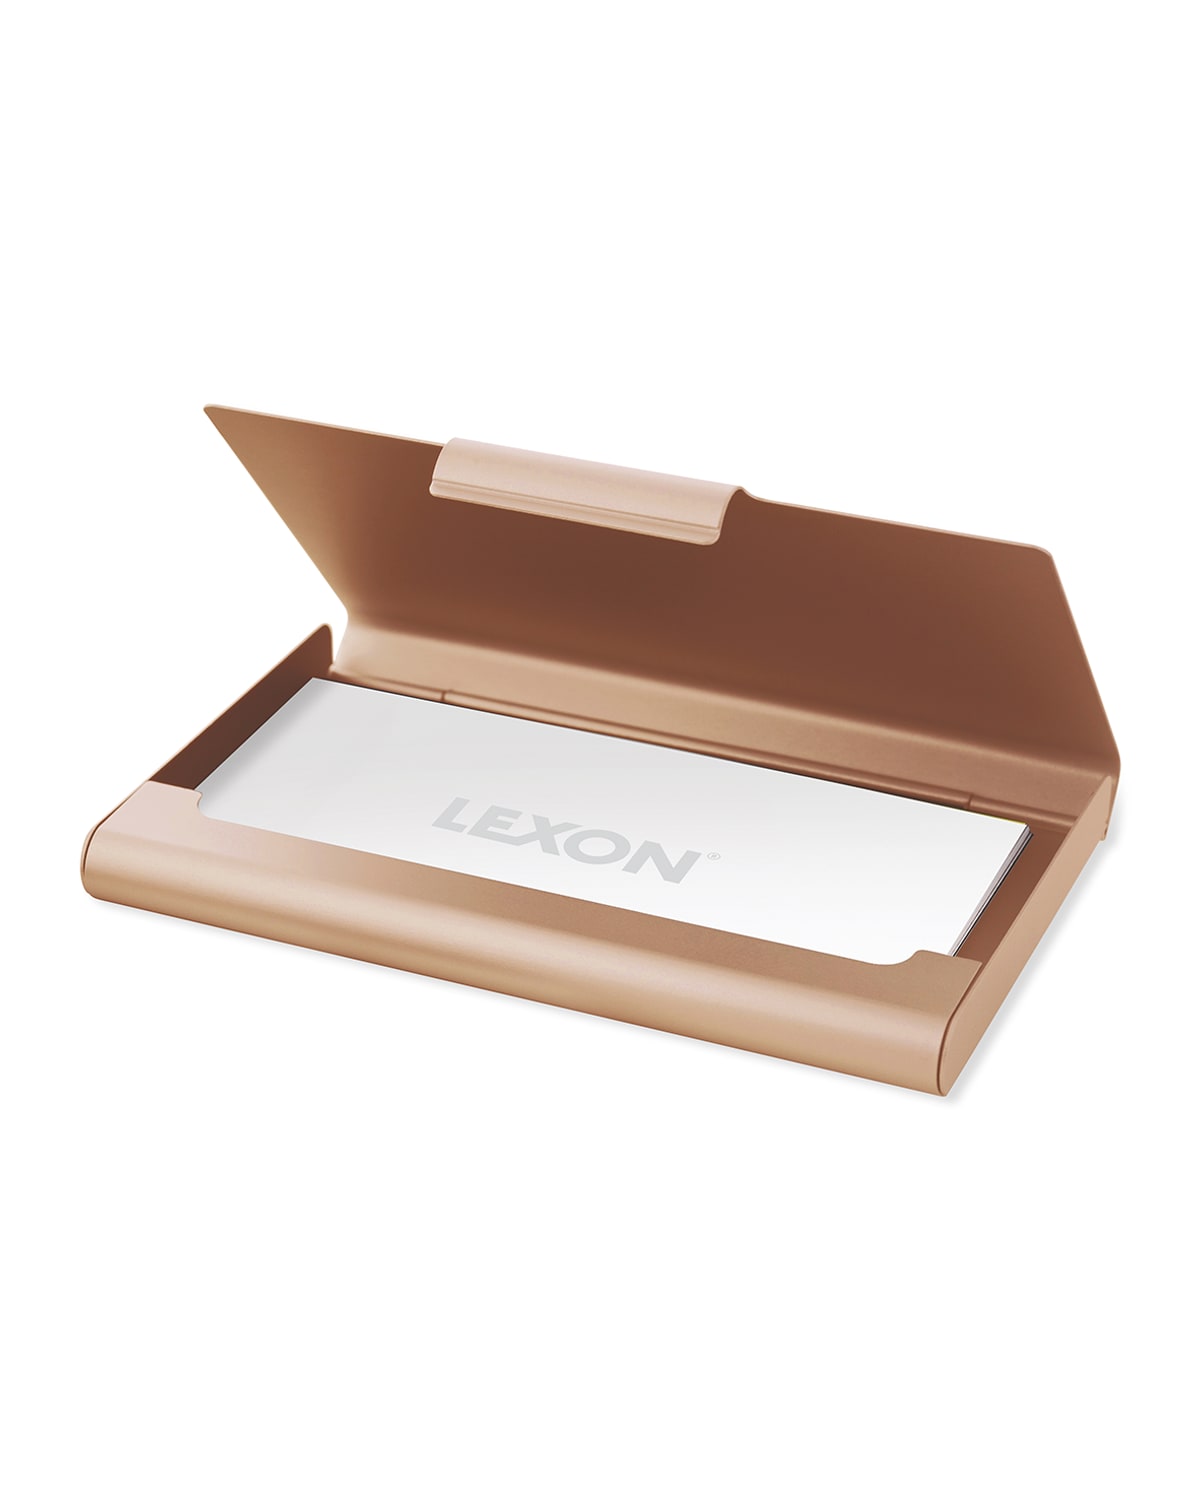 Lexon Design Business Card Box